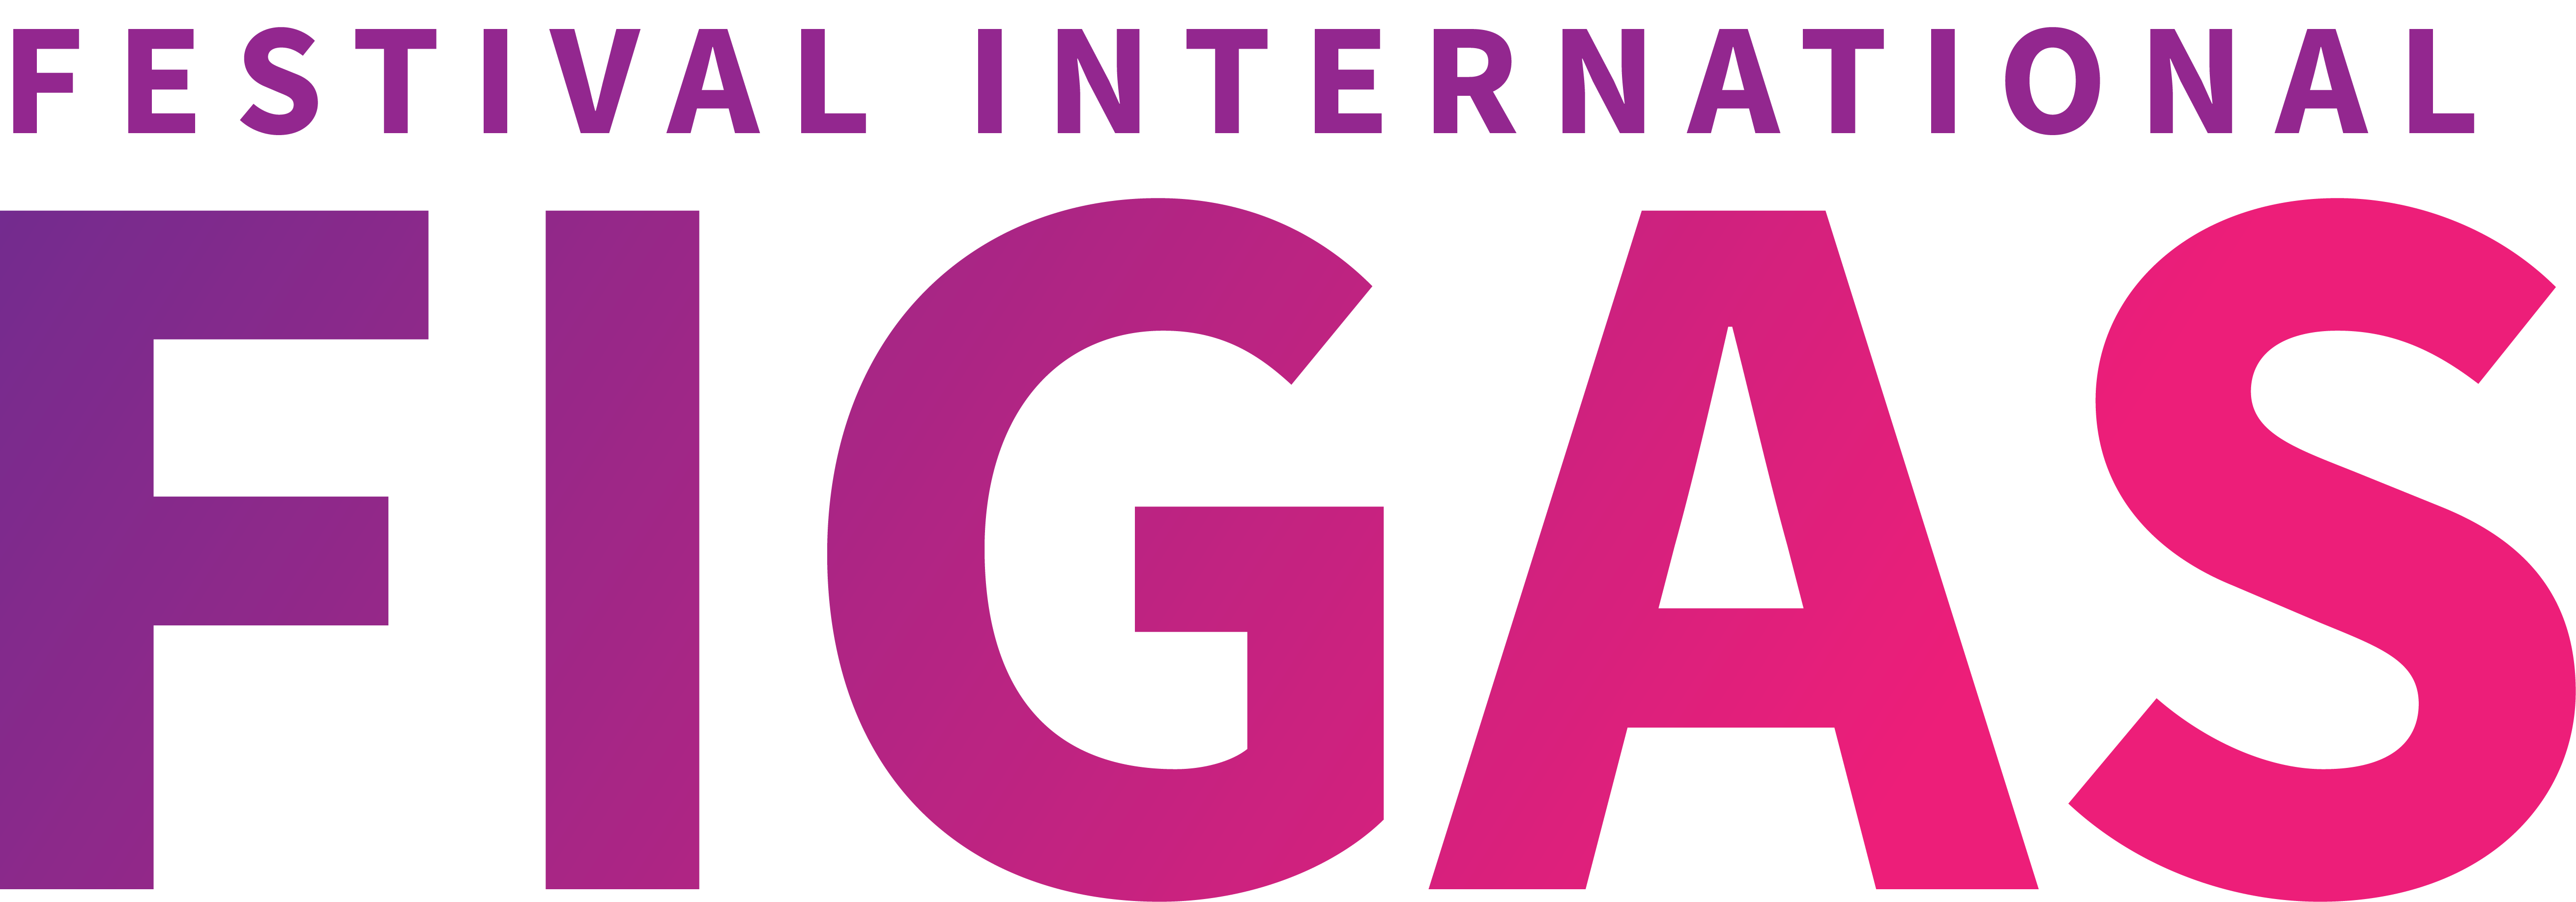 Festival International FIGAS